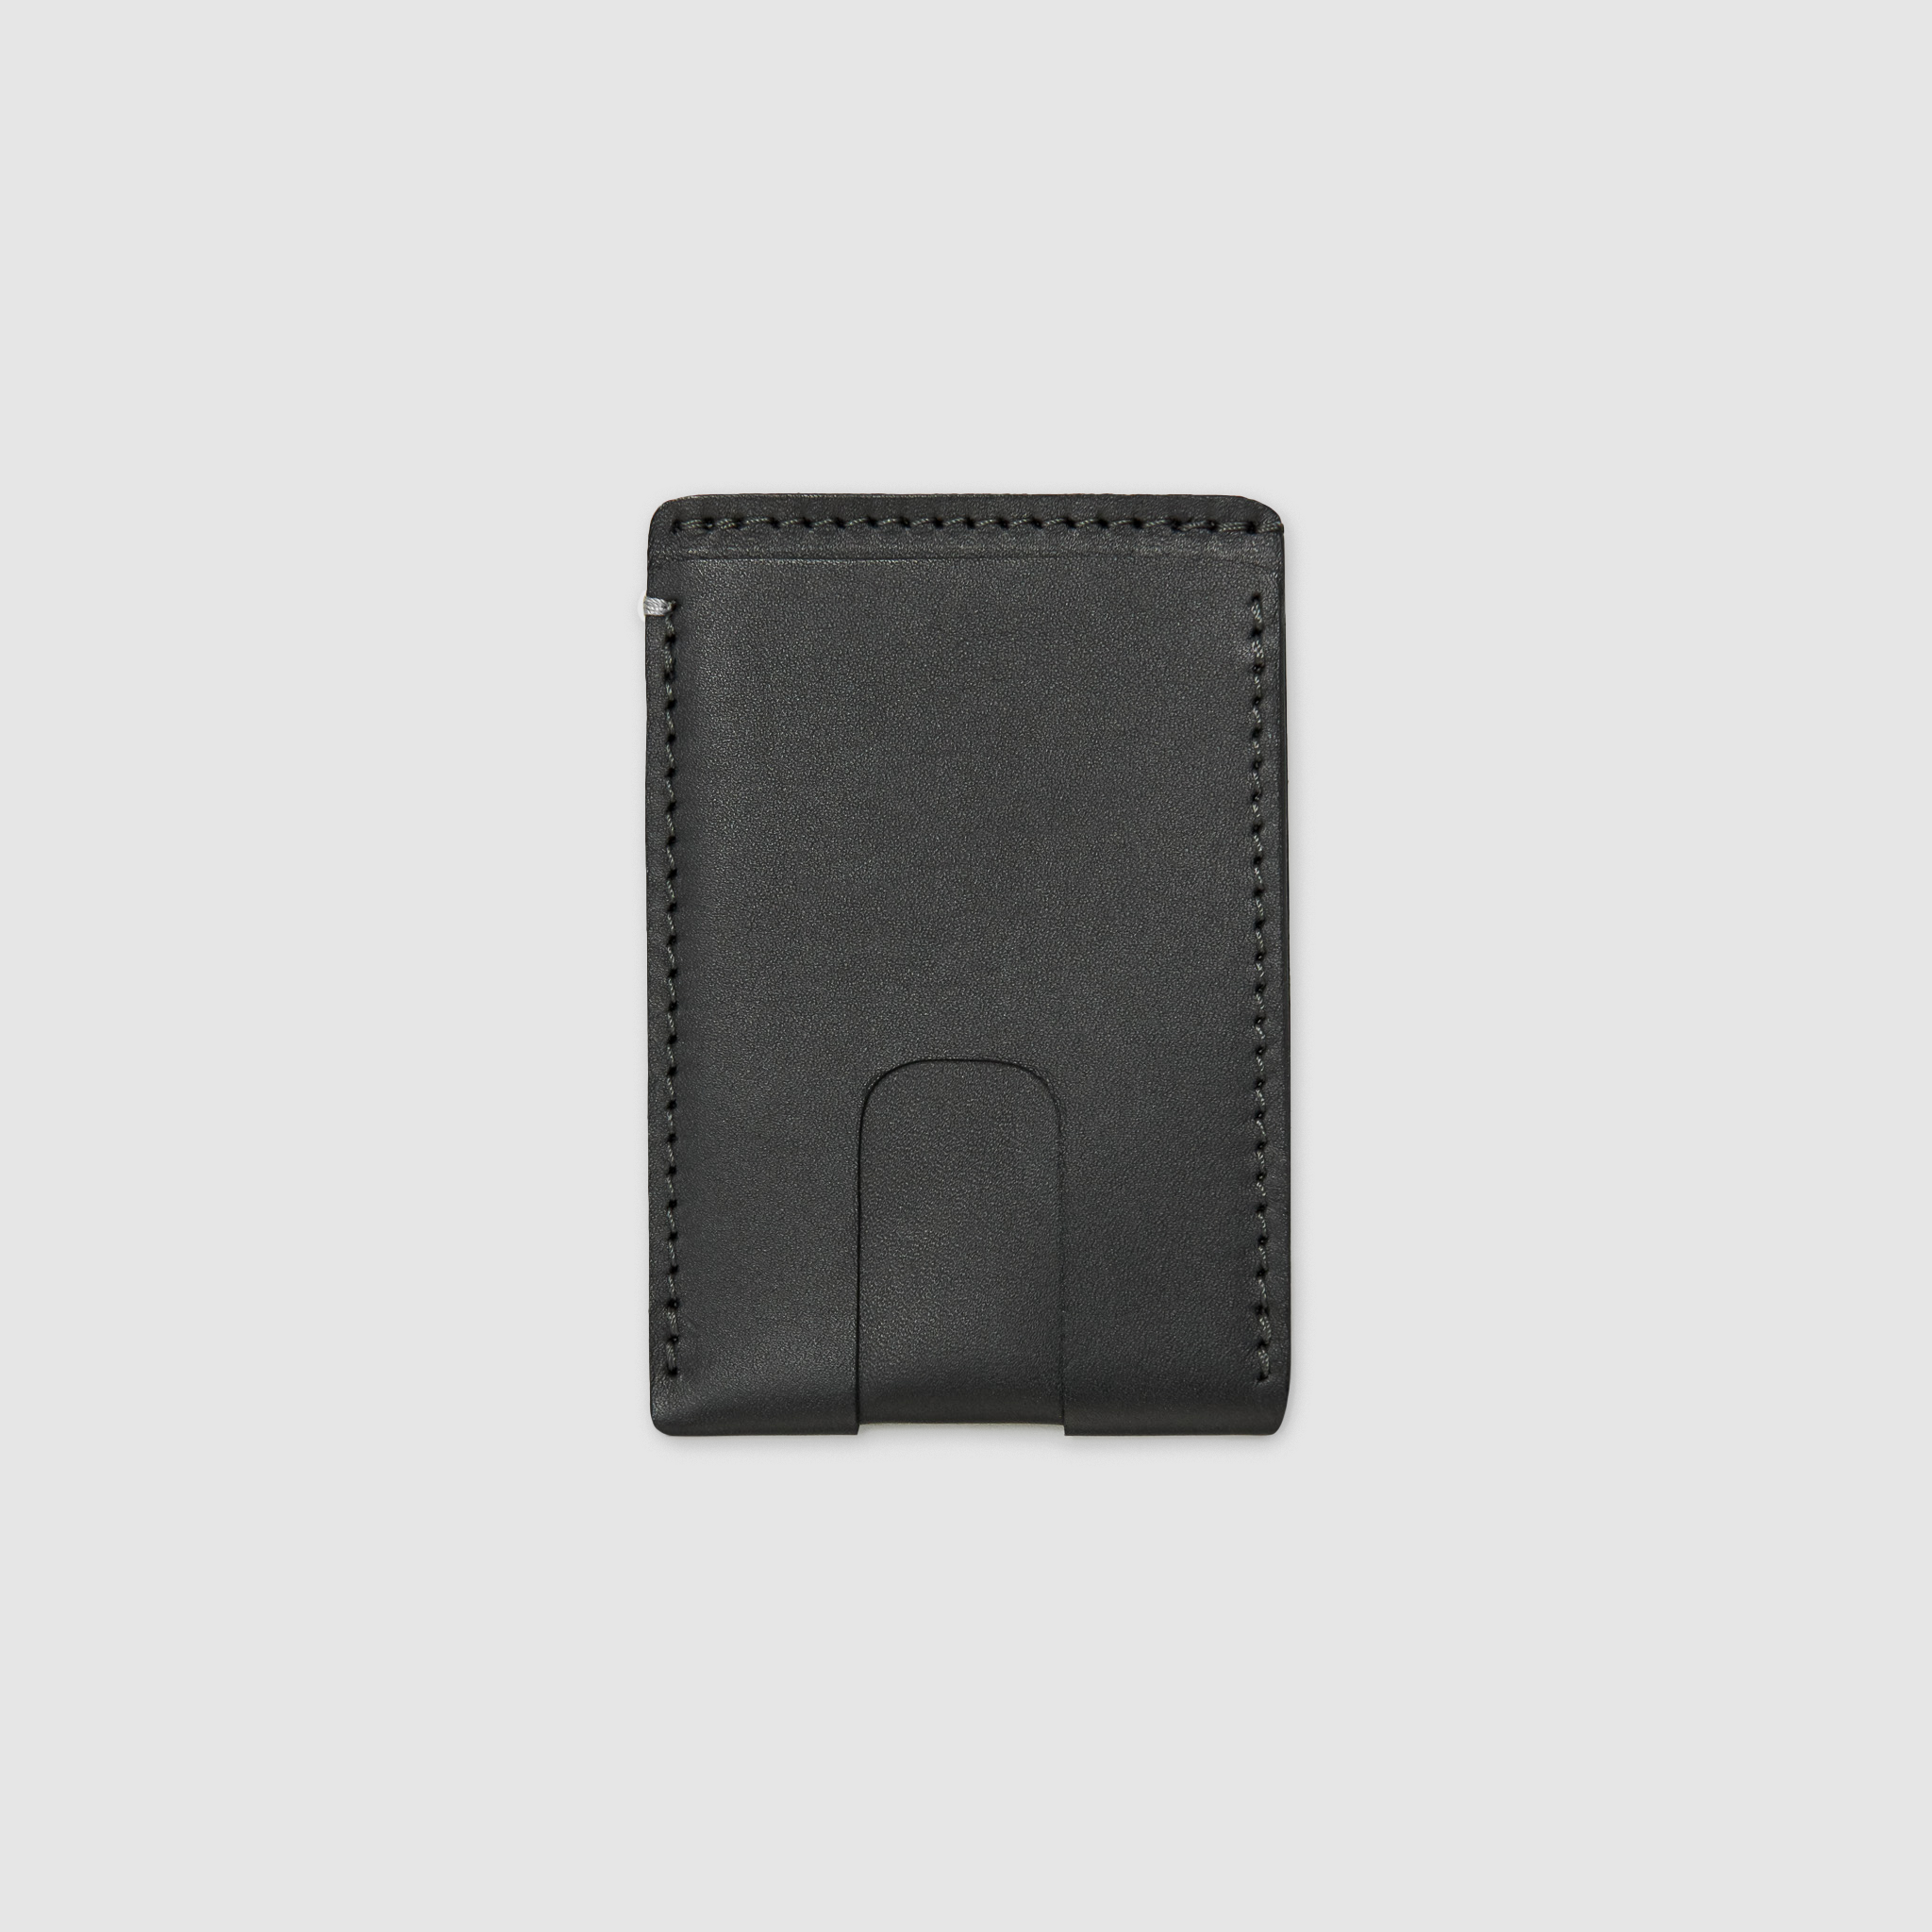 My new LV Pocket Organizer : r/wallets